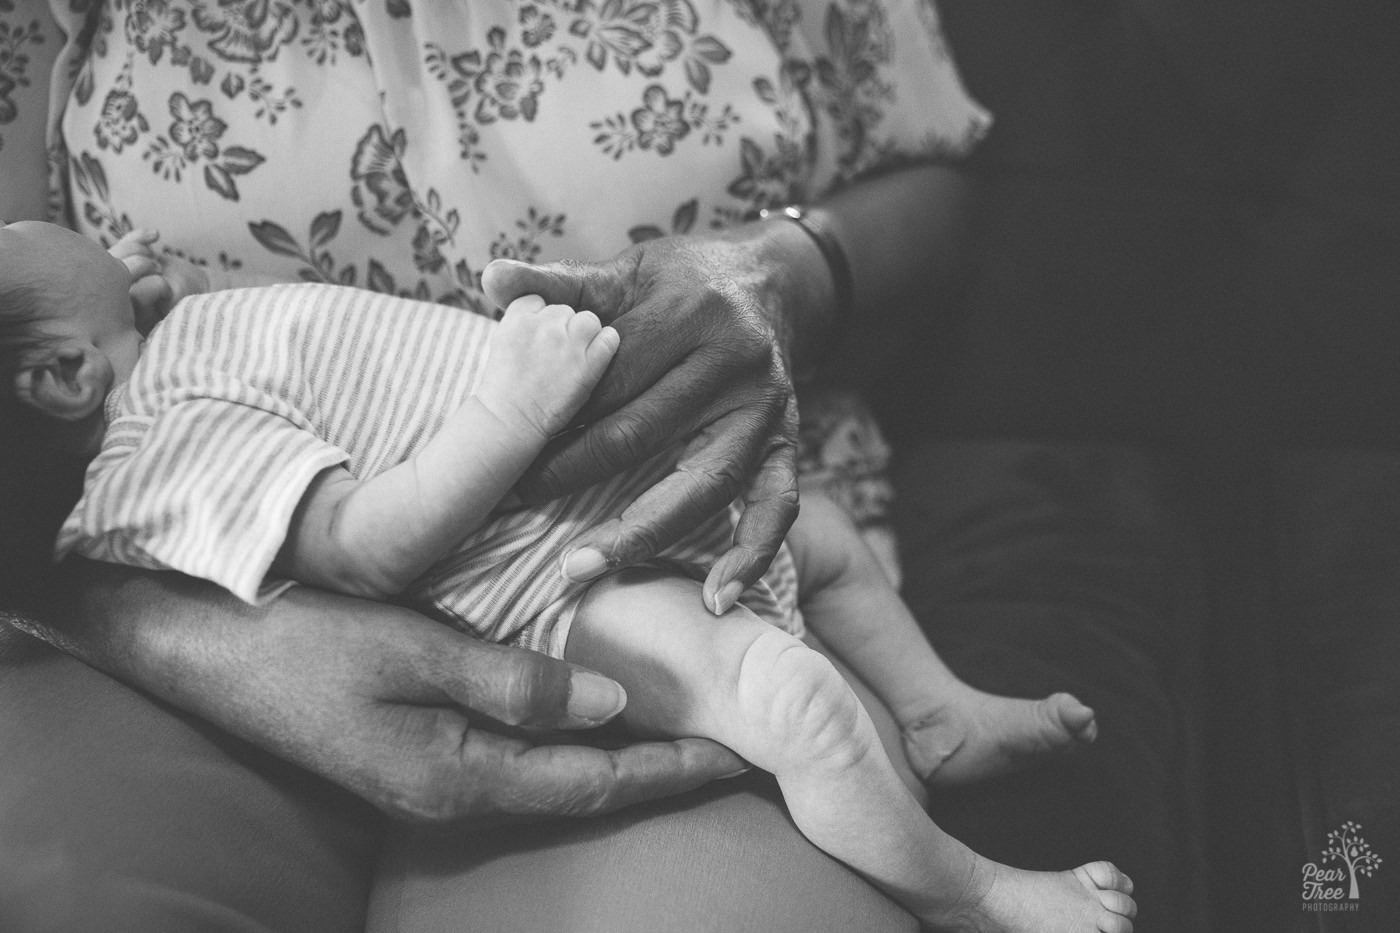 Grandma's hands holding her newborn grandson in her lap.